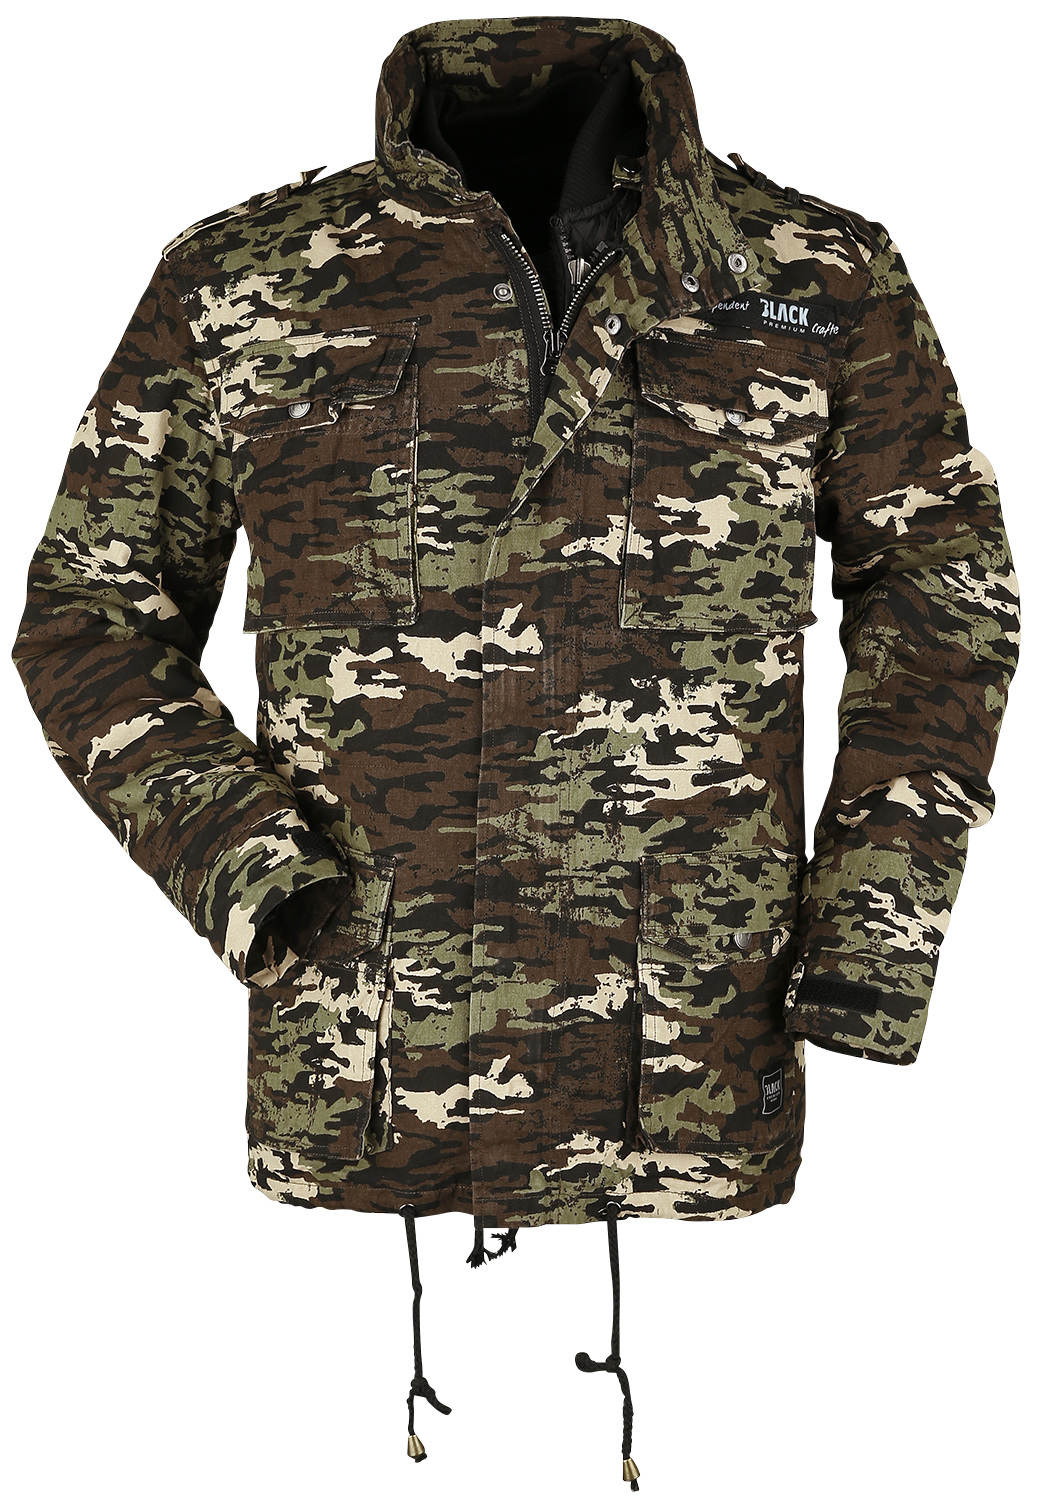 Black Premium by EMP - Army Field Jacket - Übergangsjacke - darkcamo - EMP Exklusiv!